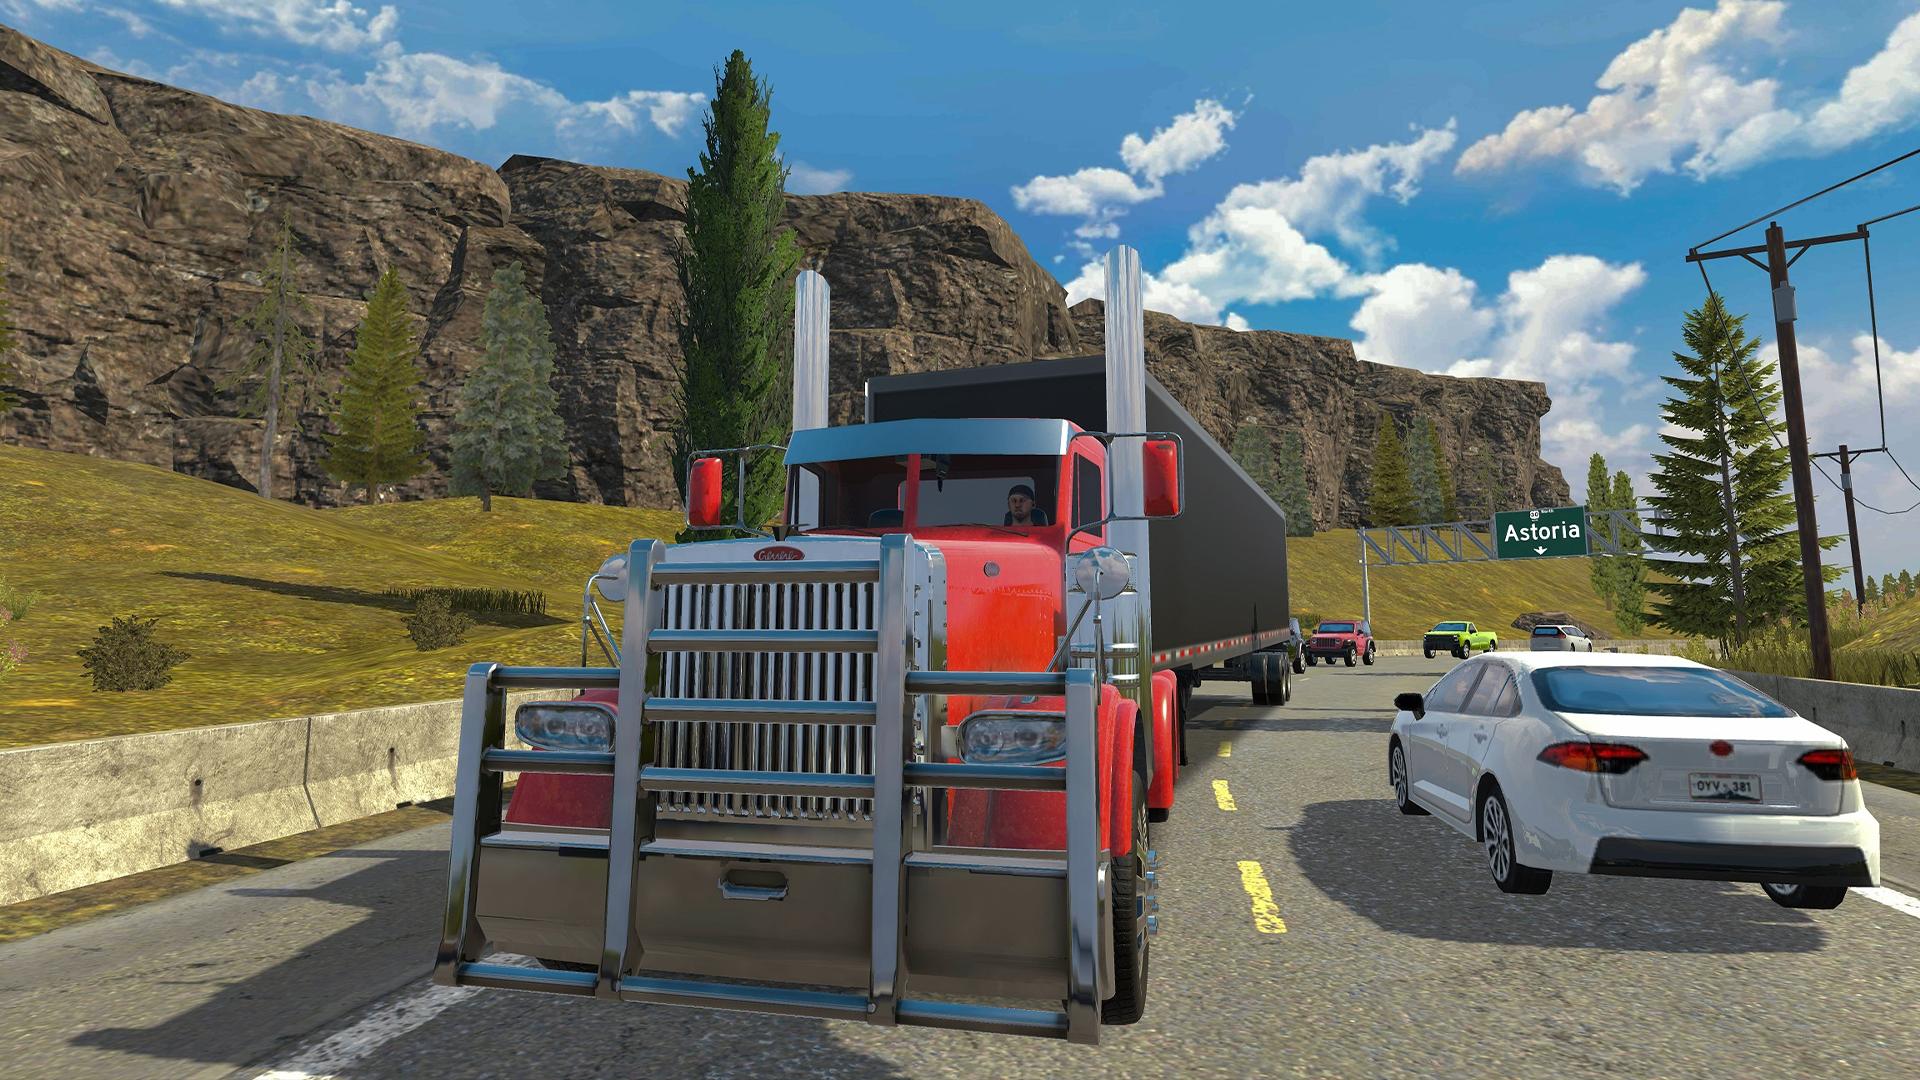 Truck Simulator USA Revolution - Apps on Google Play